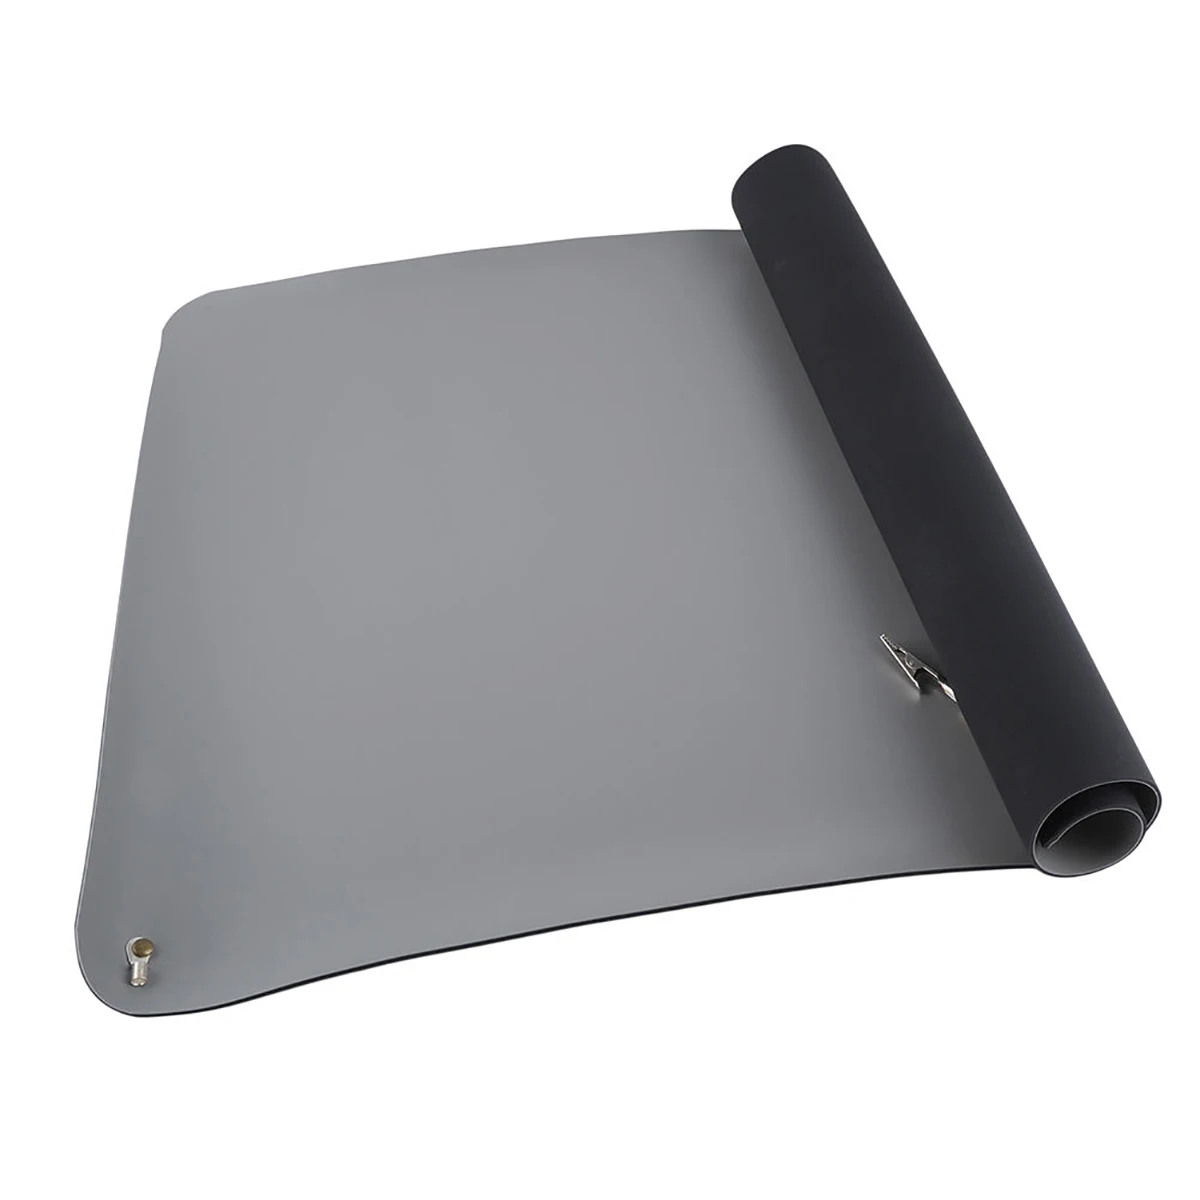 1pc 70*50 cm Black Desktop Anti Static ESD Grounding Mat Silicone Pad with Mayitr Cord for Phone PC Laptop Repair Maintenance